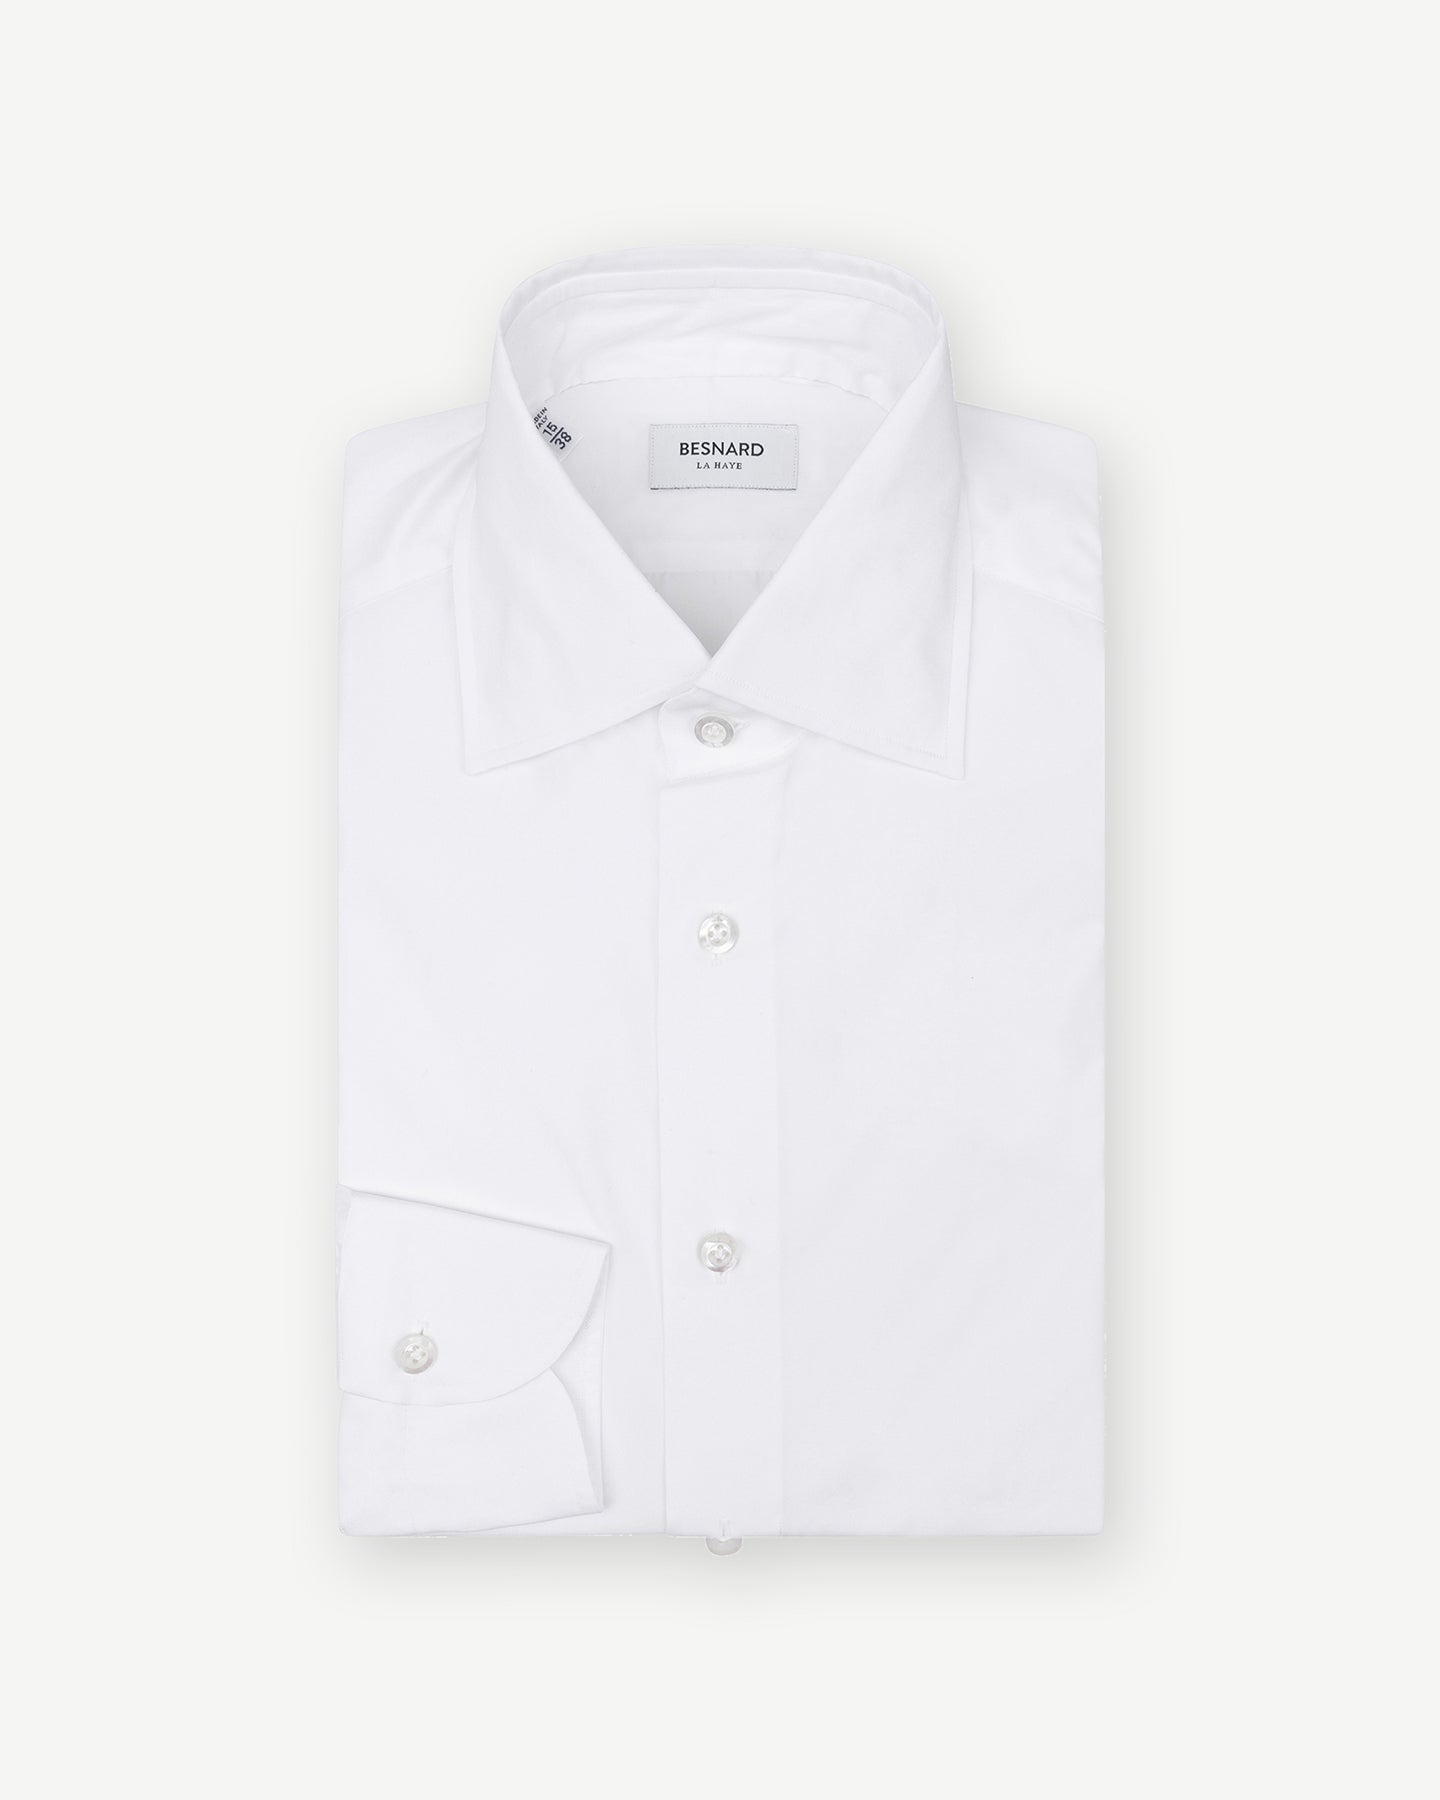 White poplin dress shirt